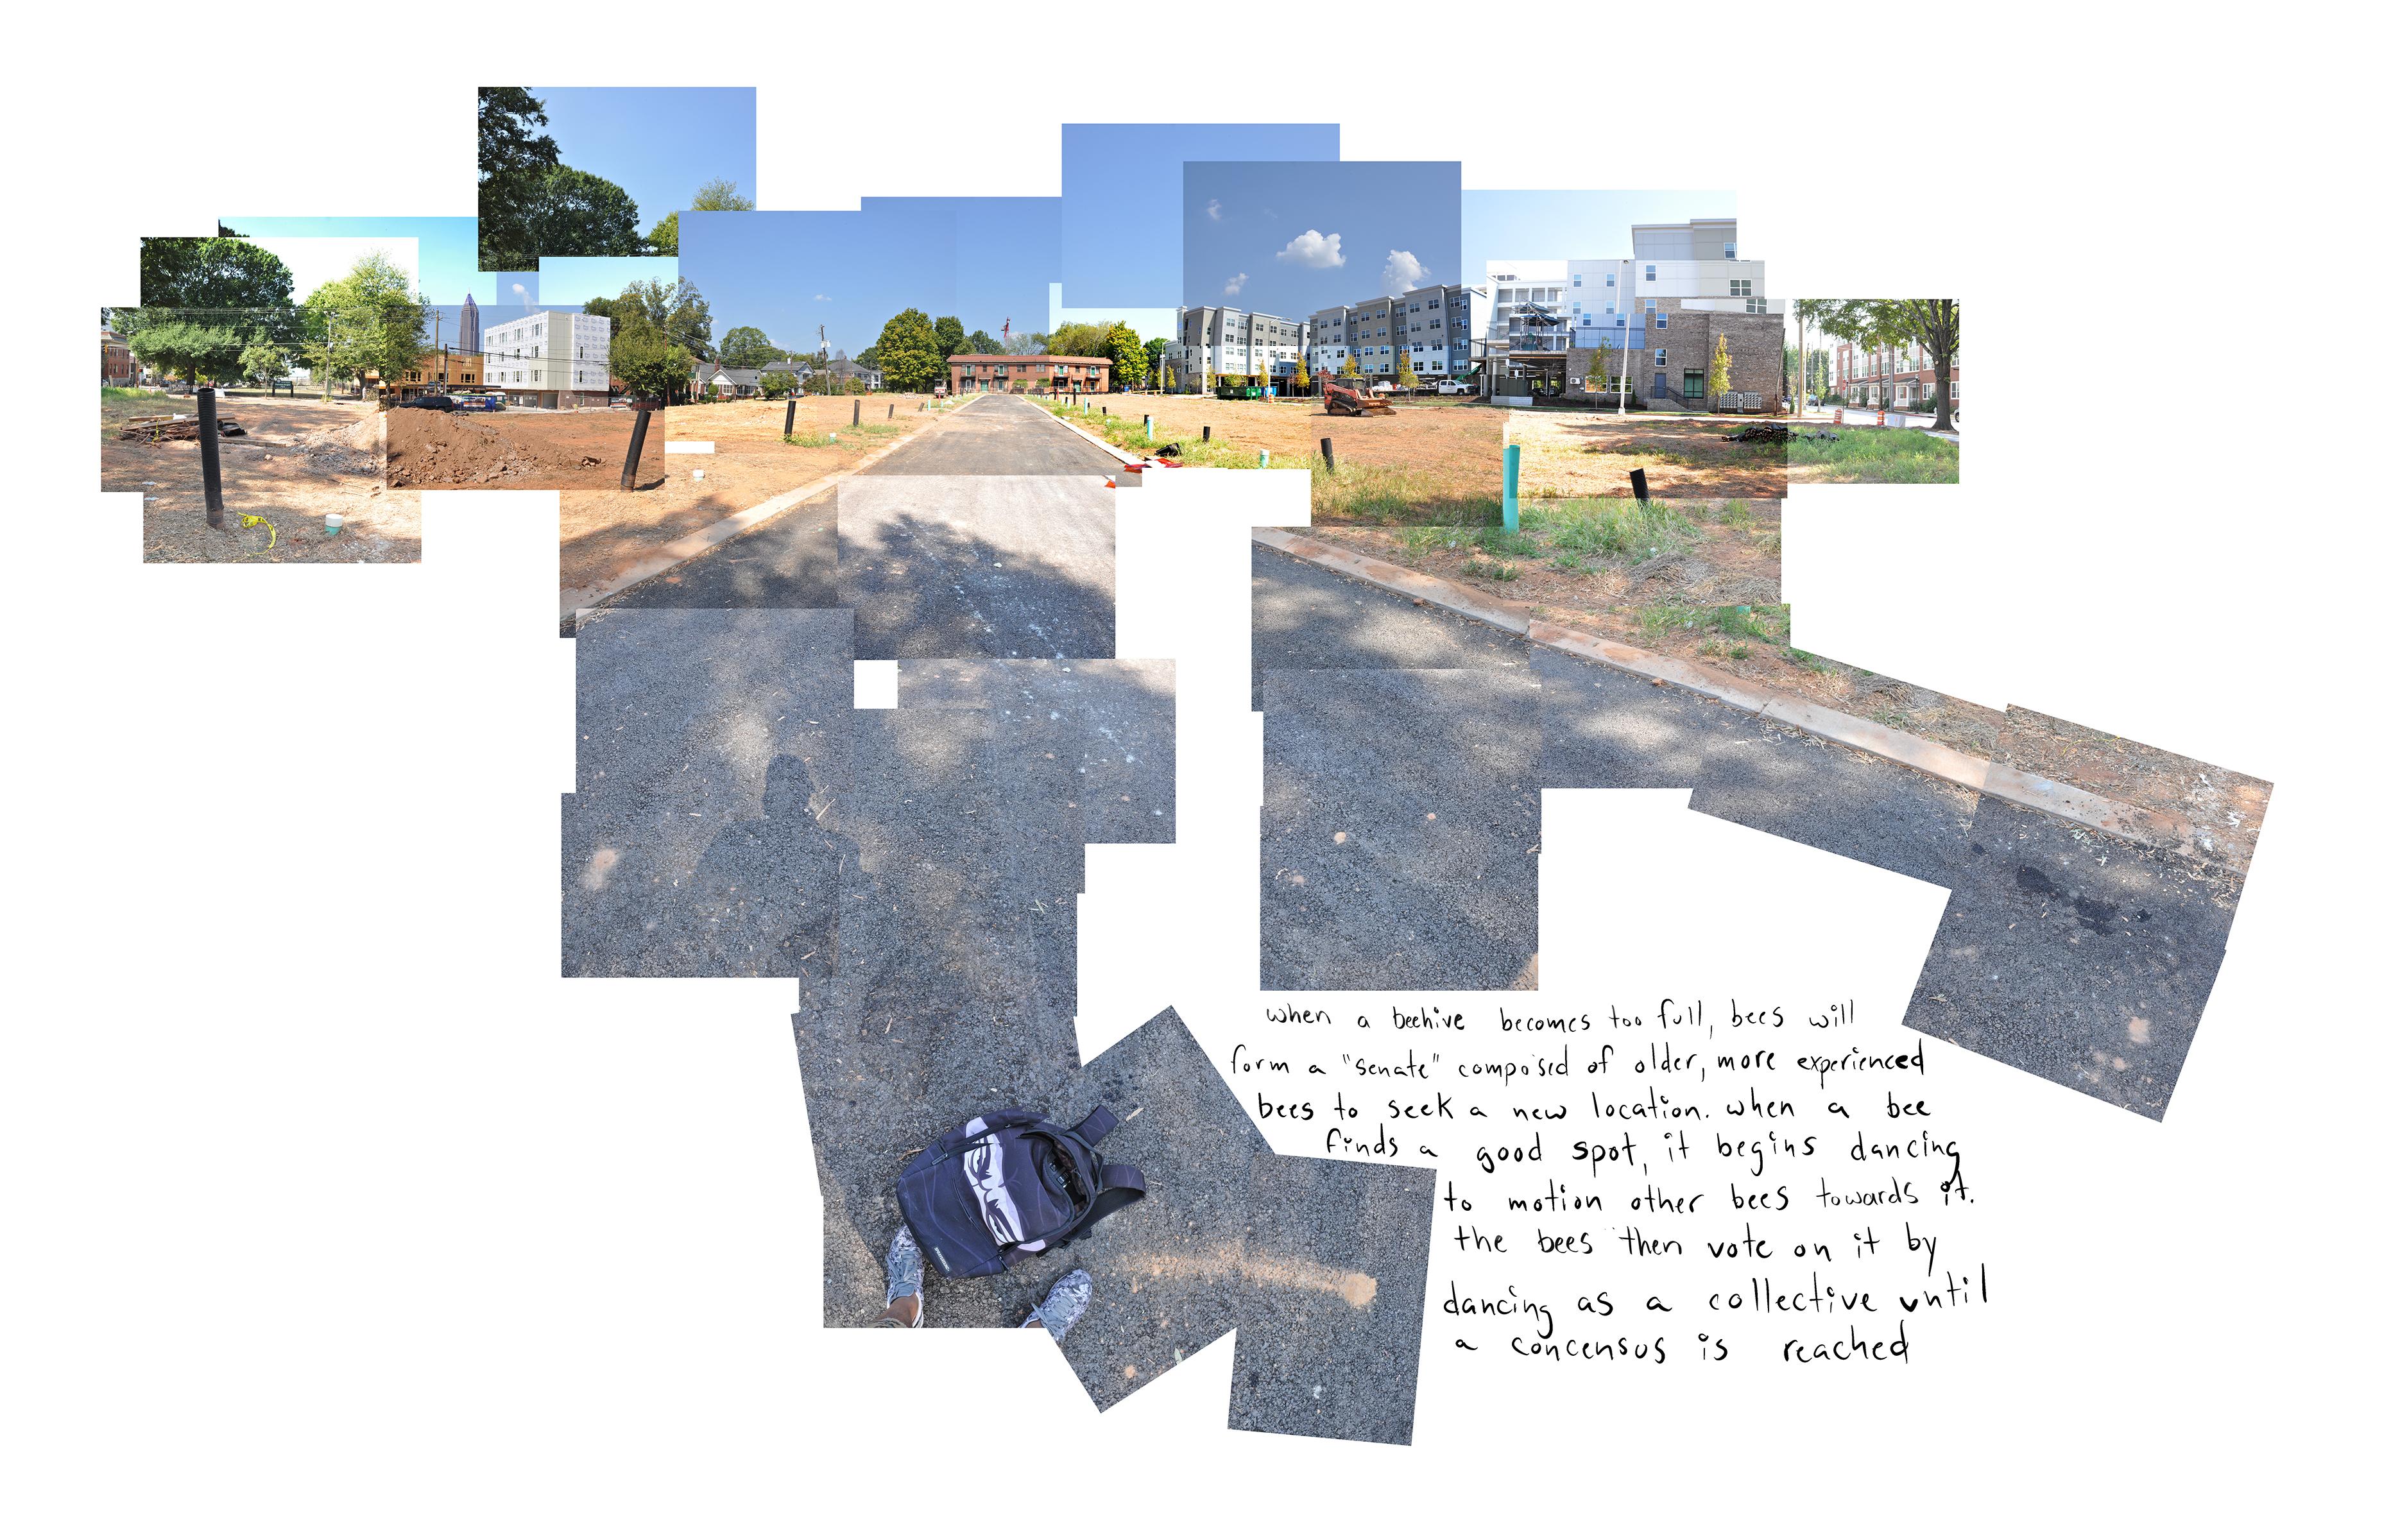 Willis Landscape Photograph - "The Senate Has Spoken" - urban landscape - composite image - David Hockney